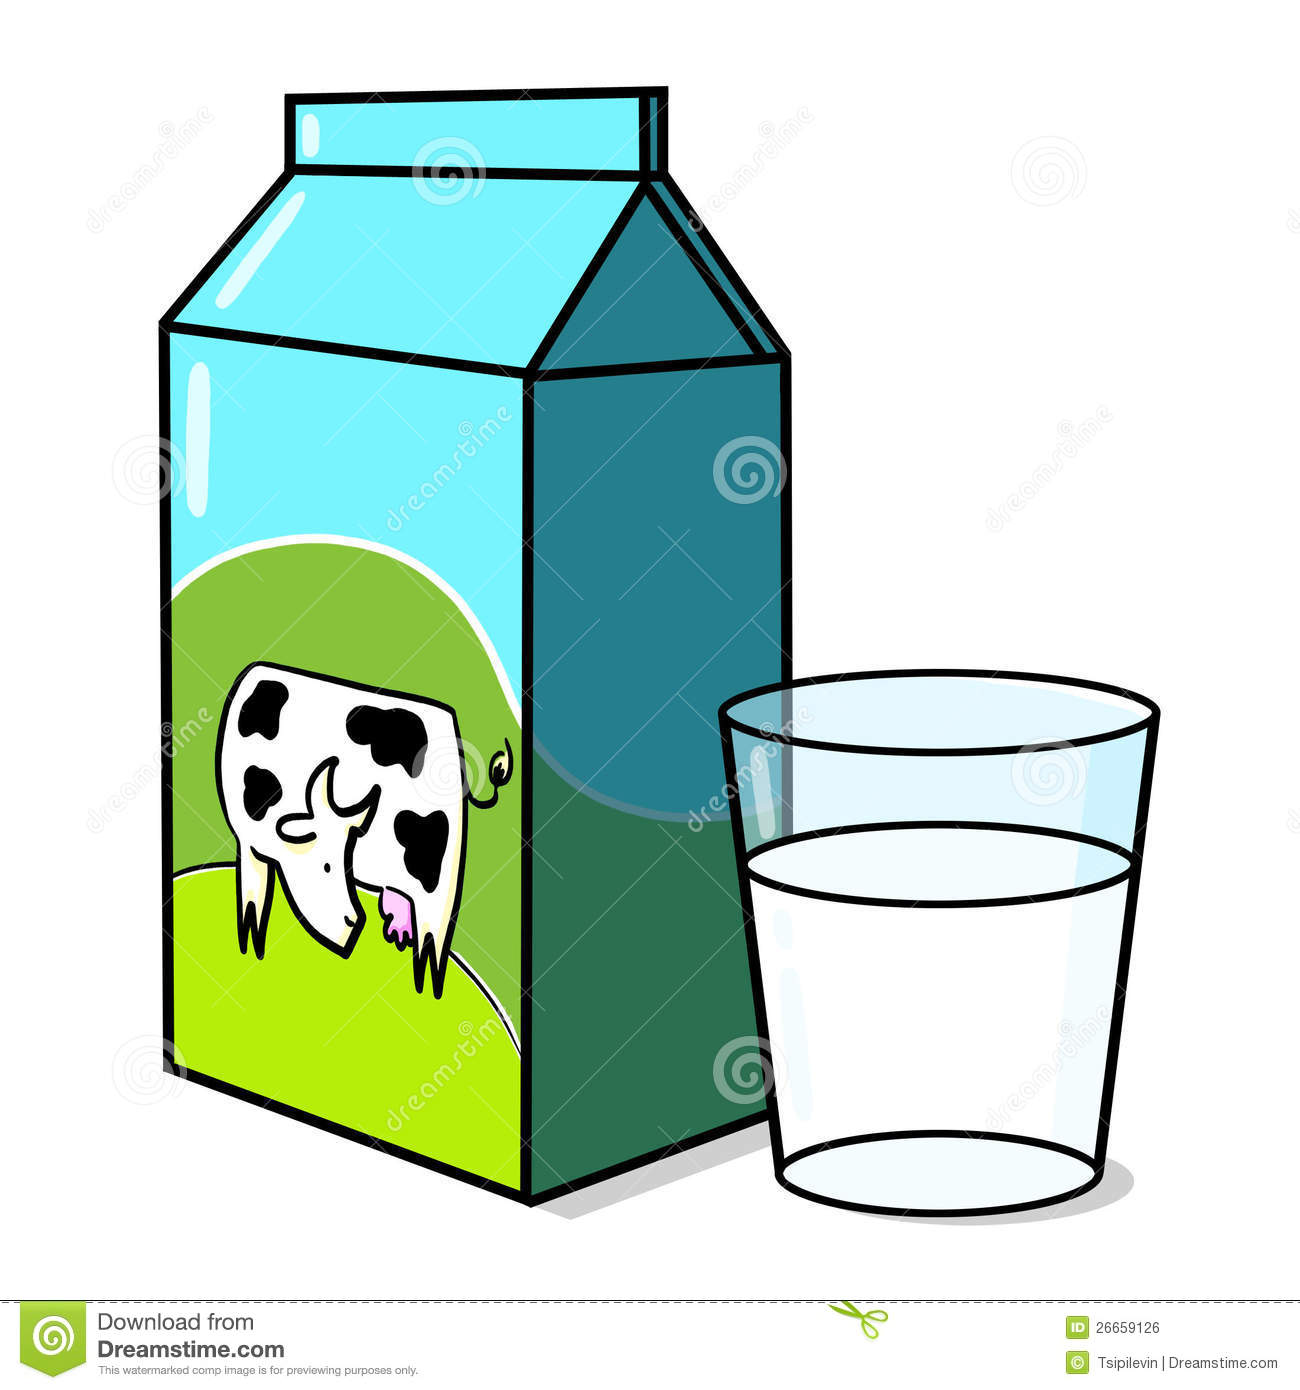 Glass of Milk Clip Art